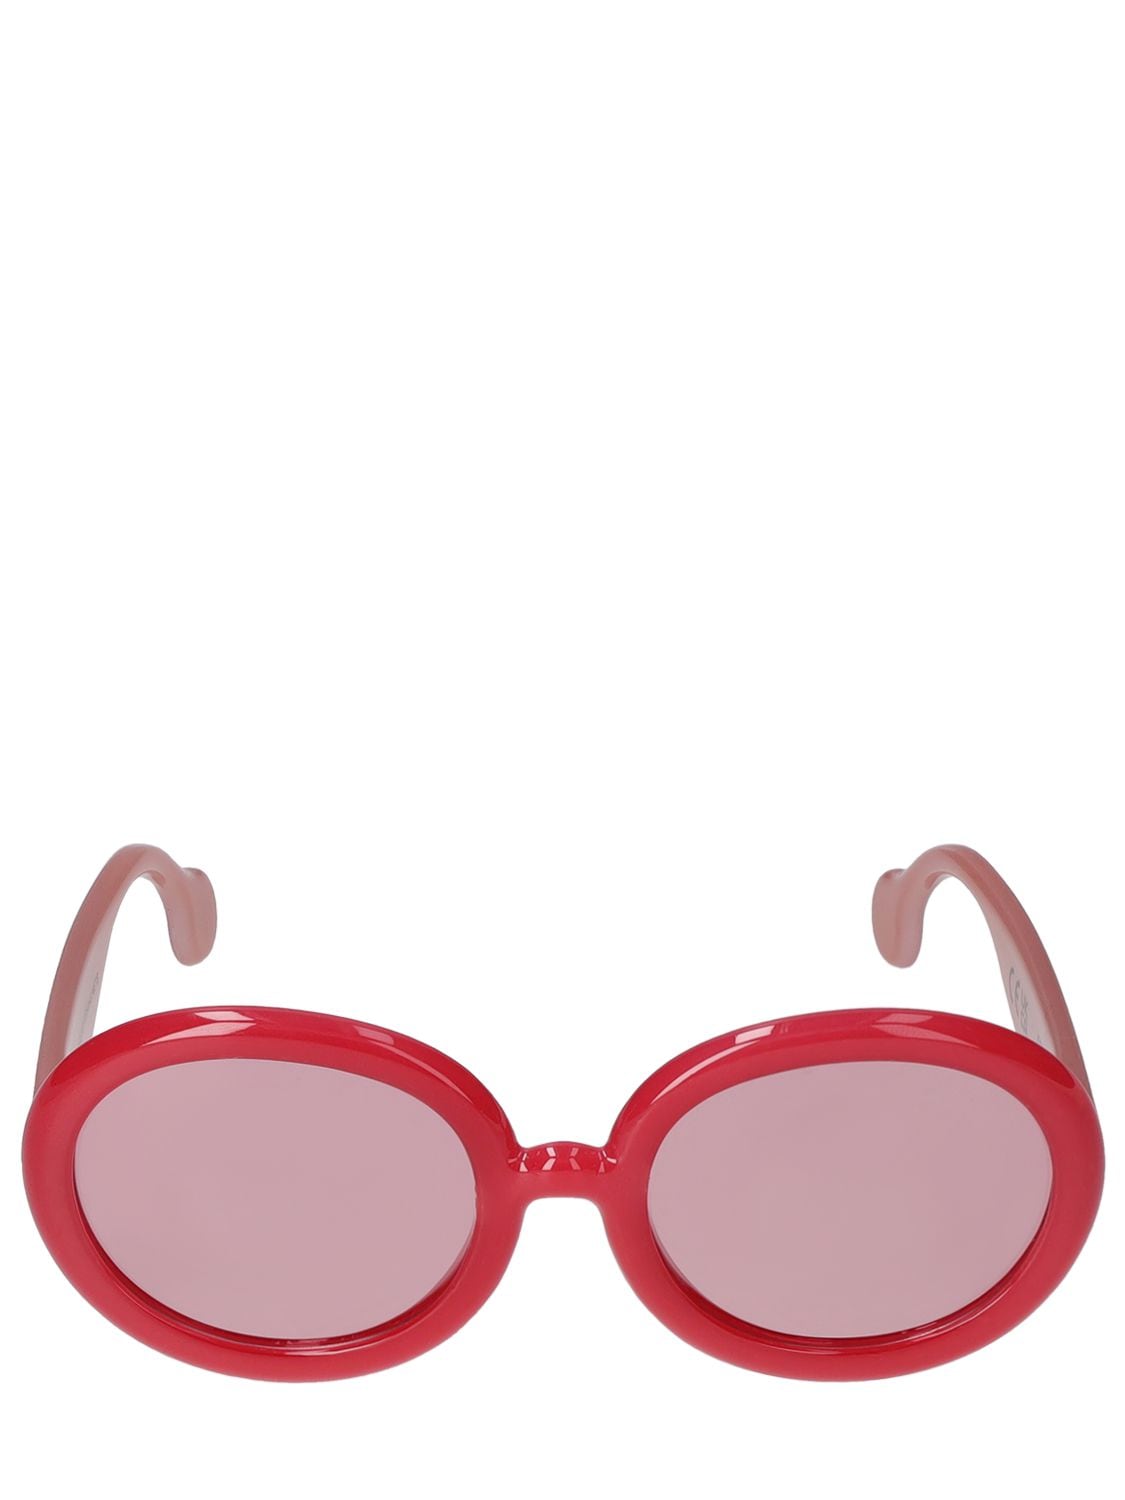 Image of Recycled Econyl Sunglasses